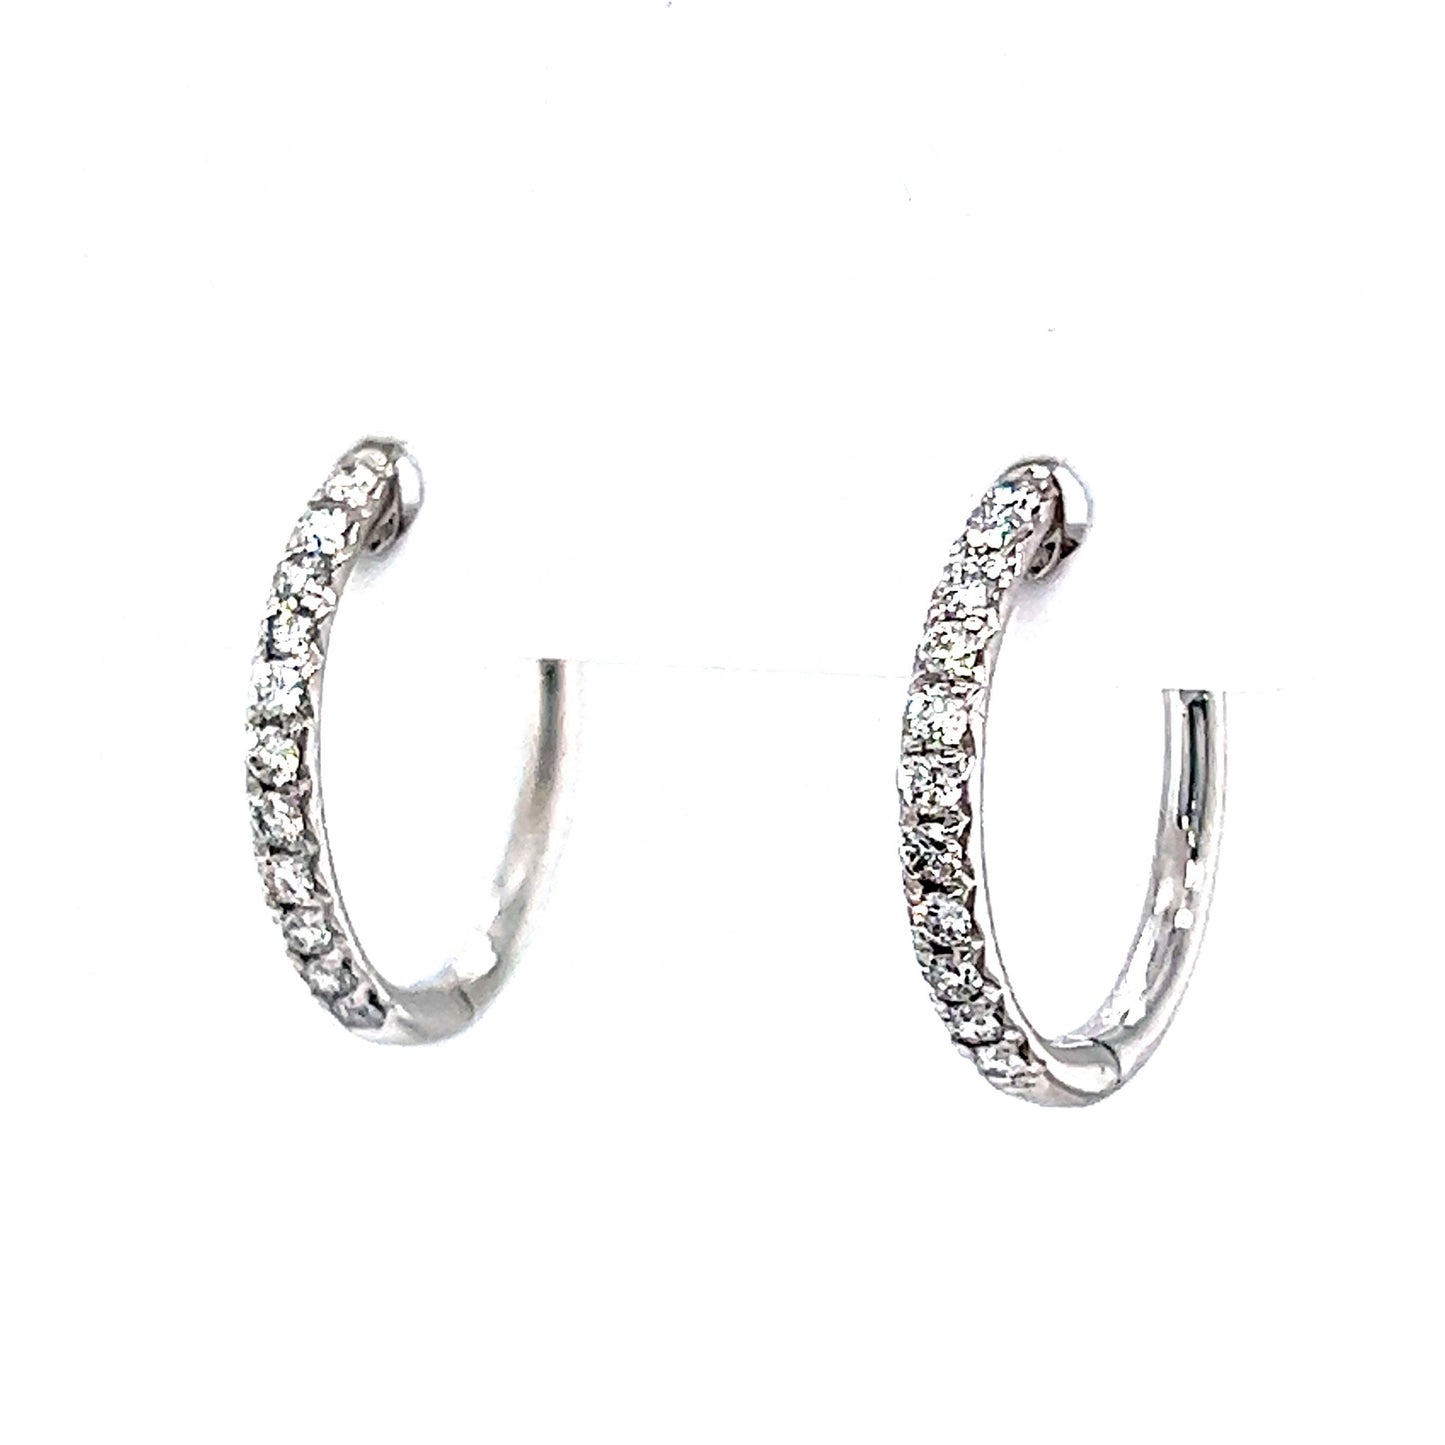 15mm Round Diamond Hoop Earrings in 14k White Gold